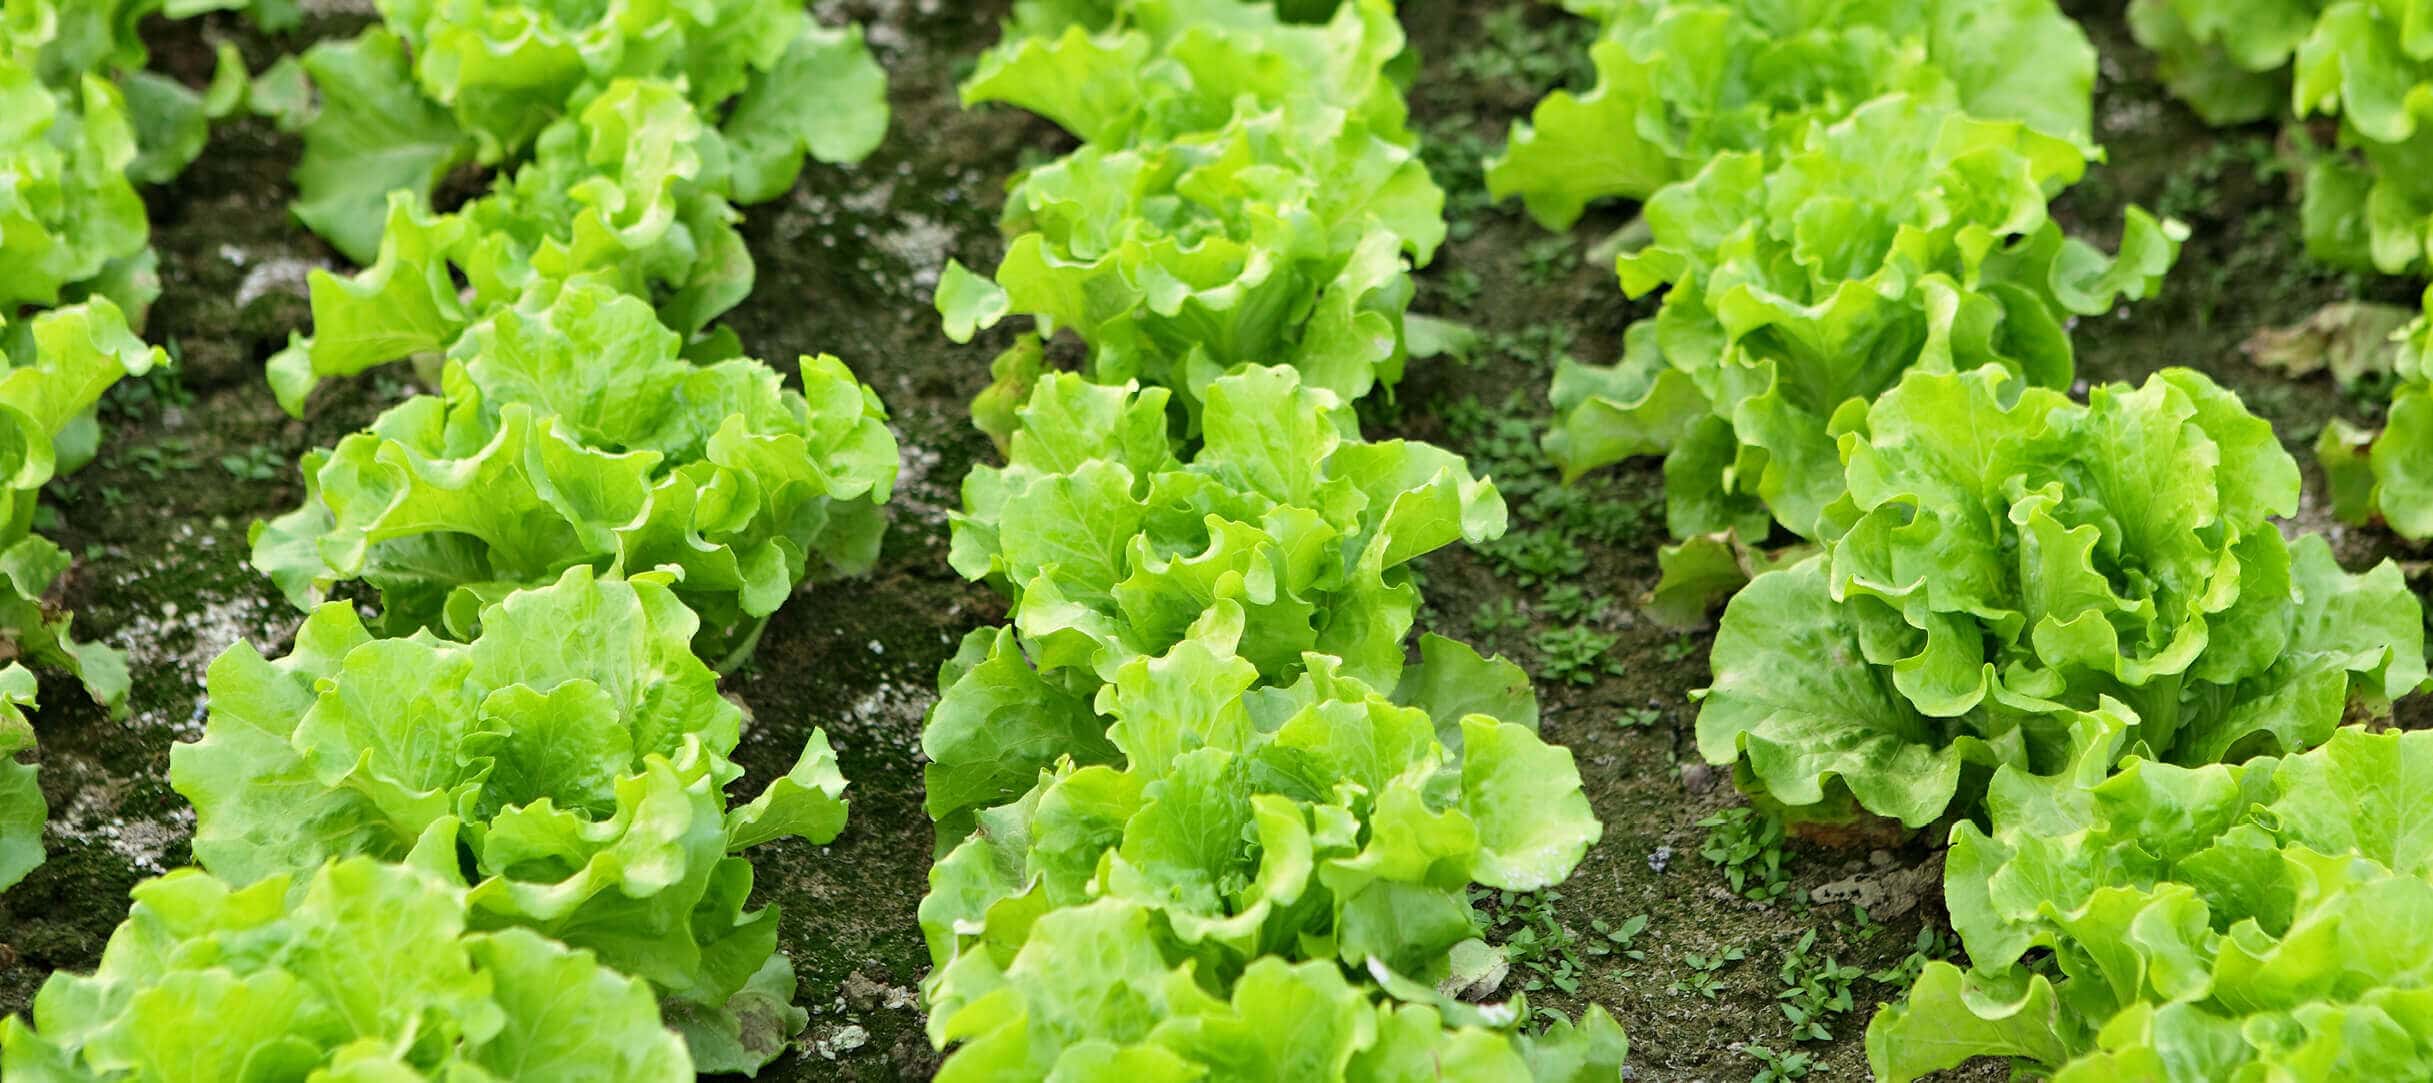 mcdonalds grüner salat